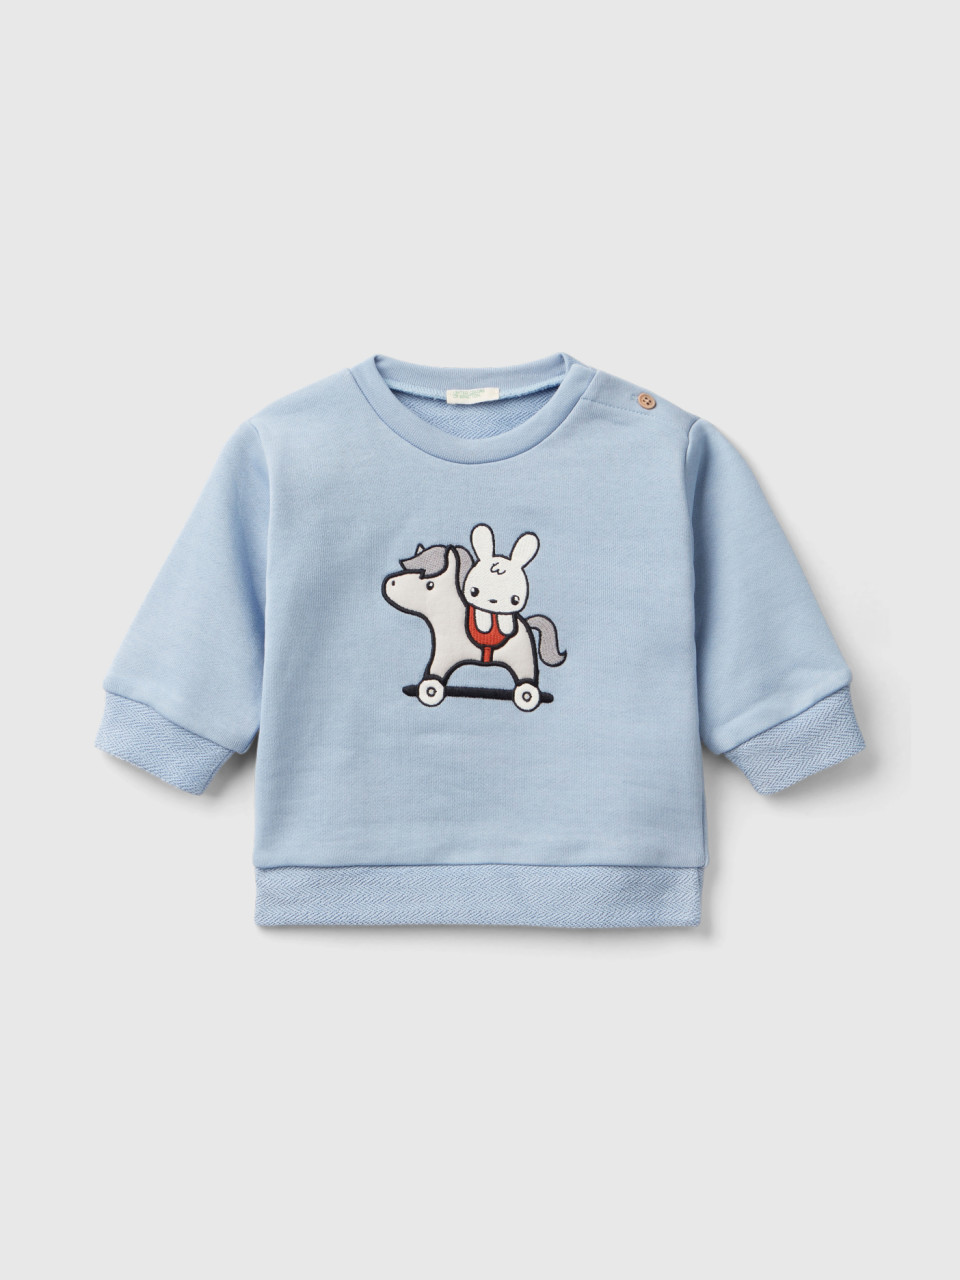 Benetton, Sweatshirt With Bunny Embroidery, Sky Blue, Kids